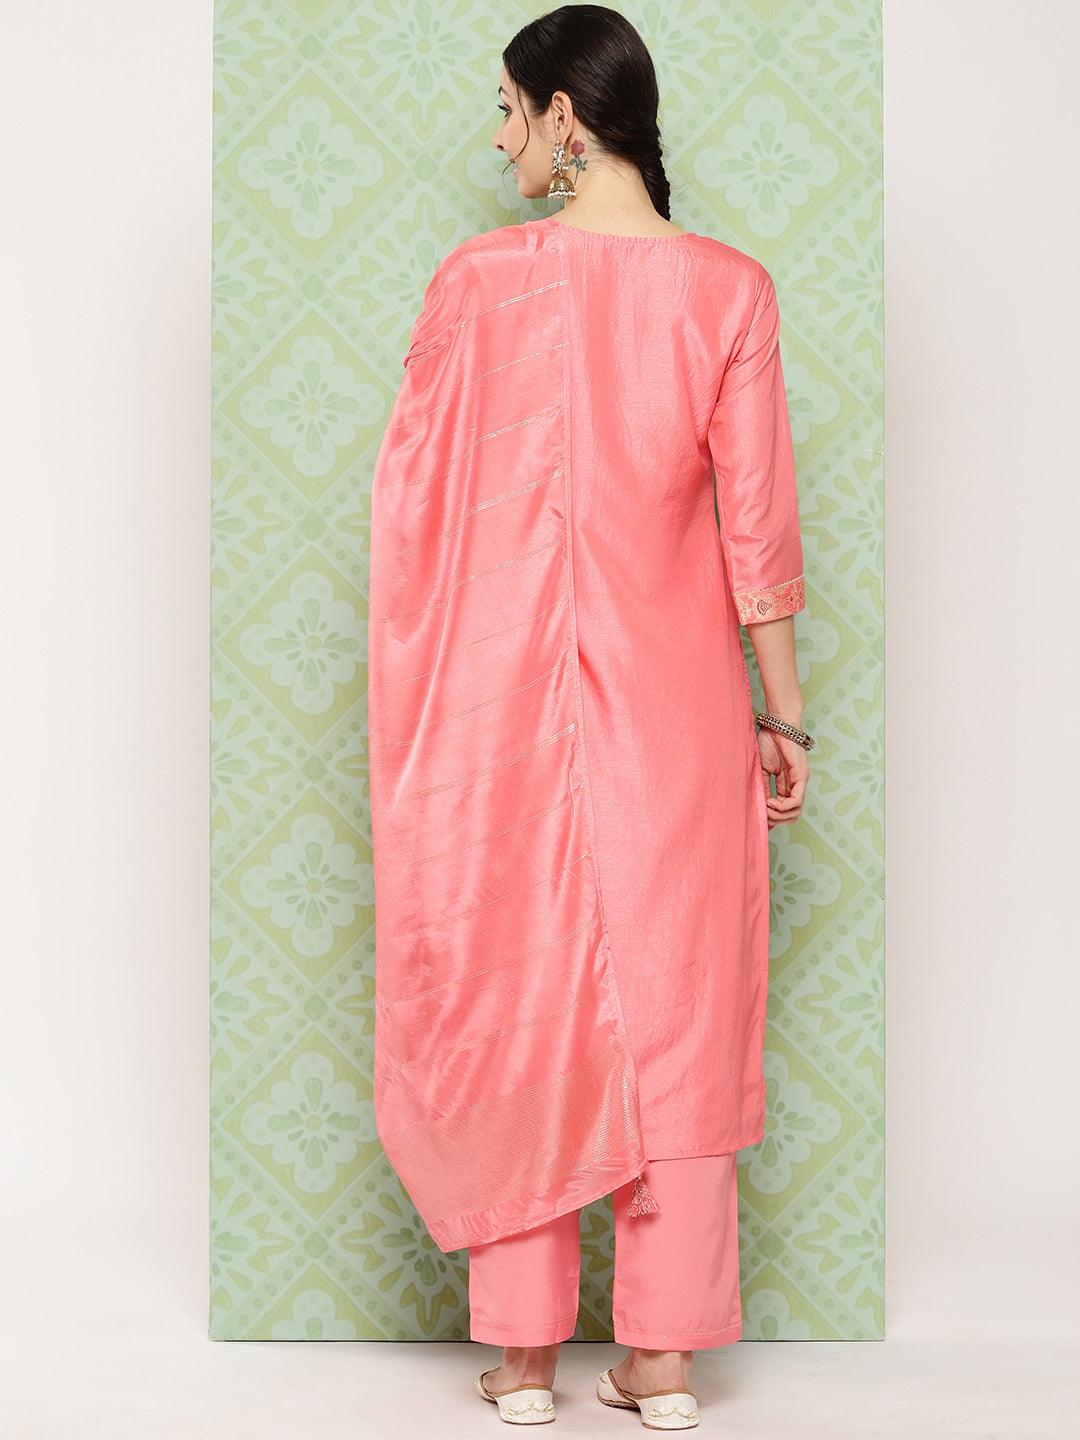 Peach Woven Design Silk Blend Straight Suit With Dupatta